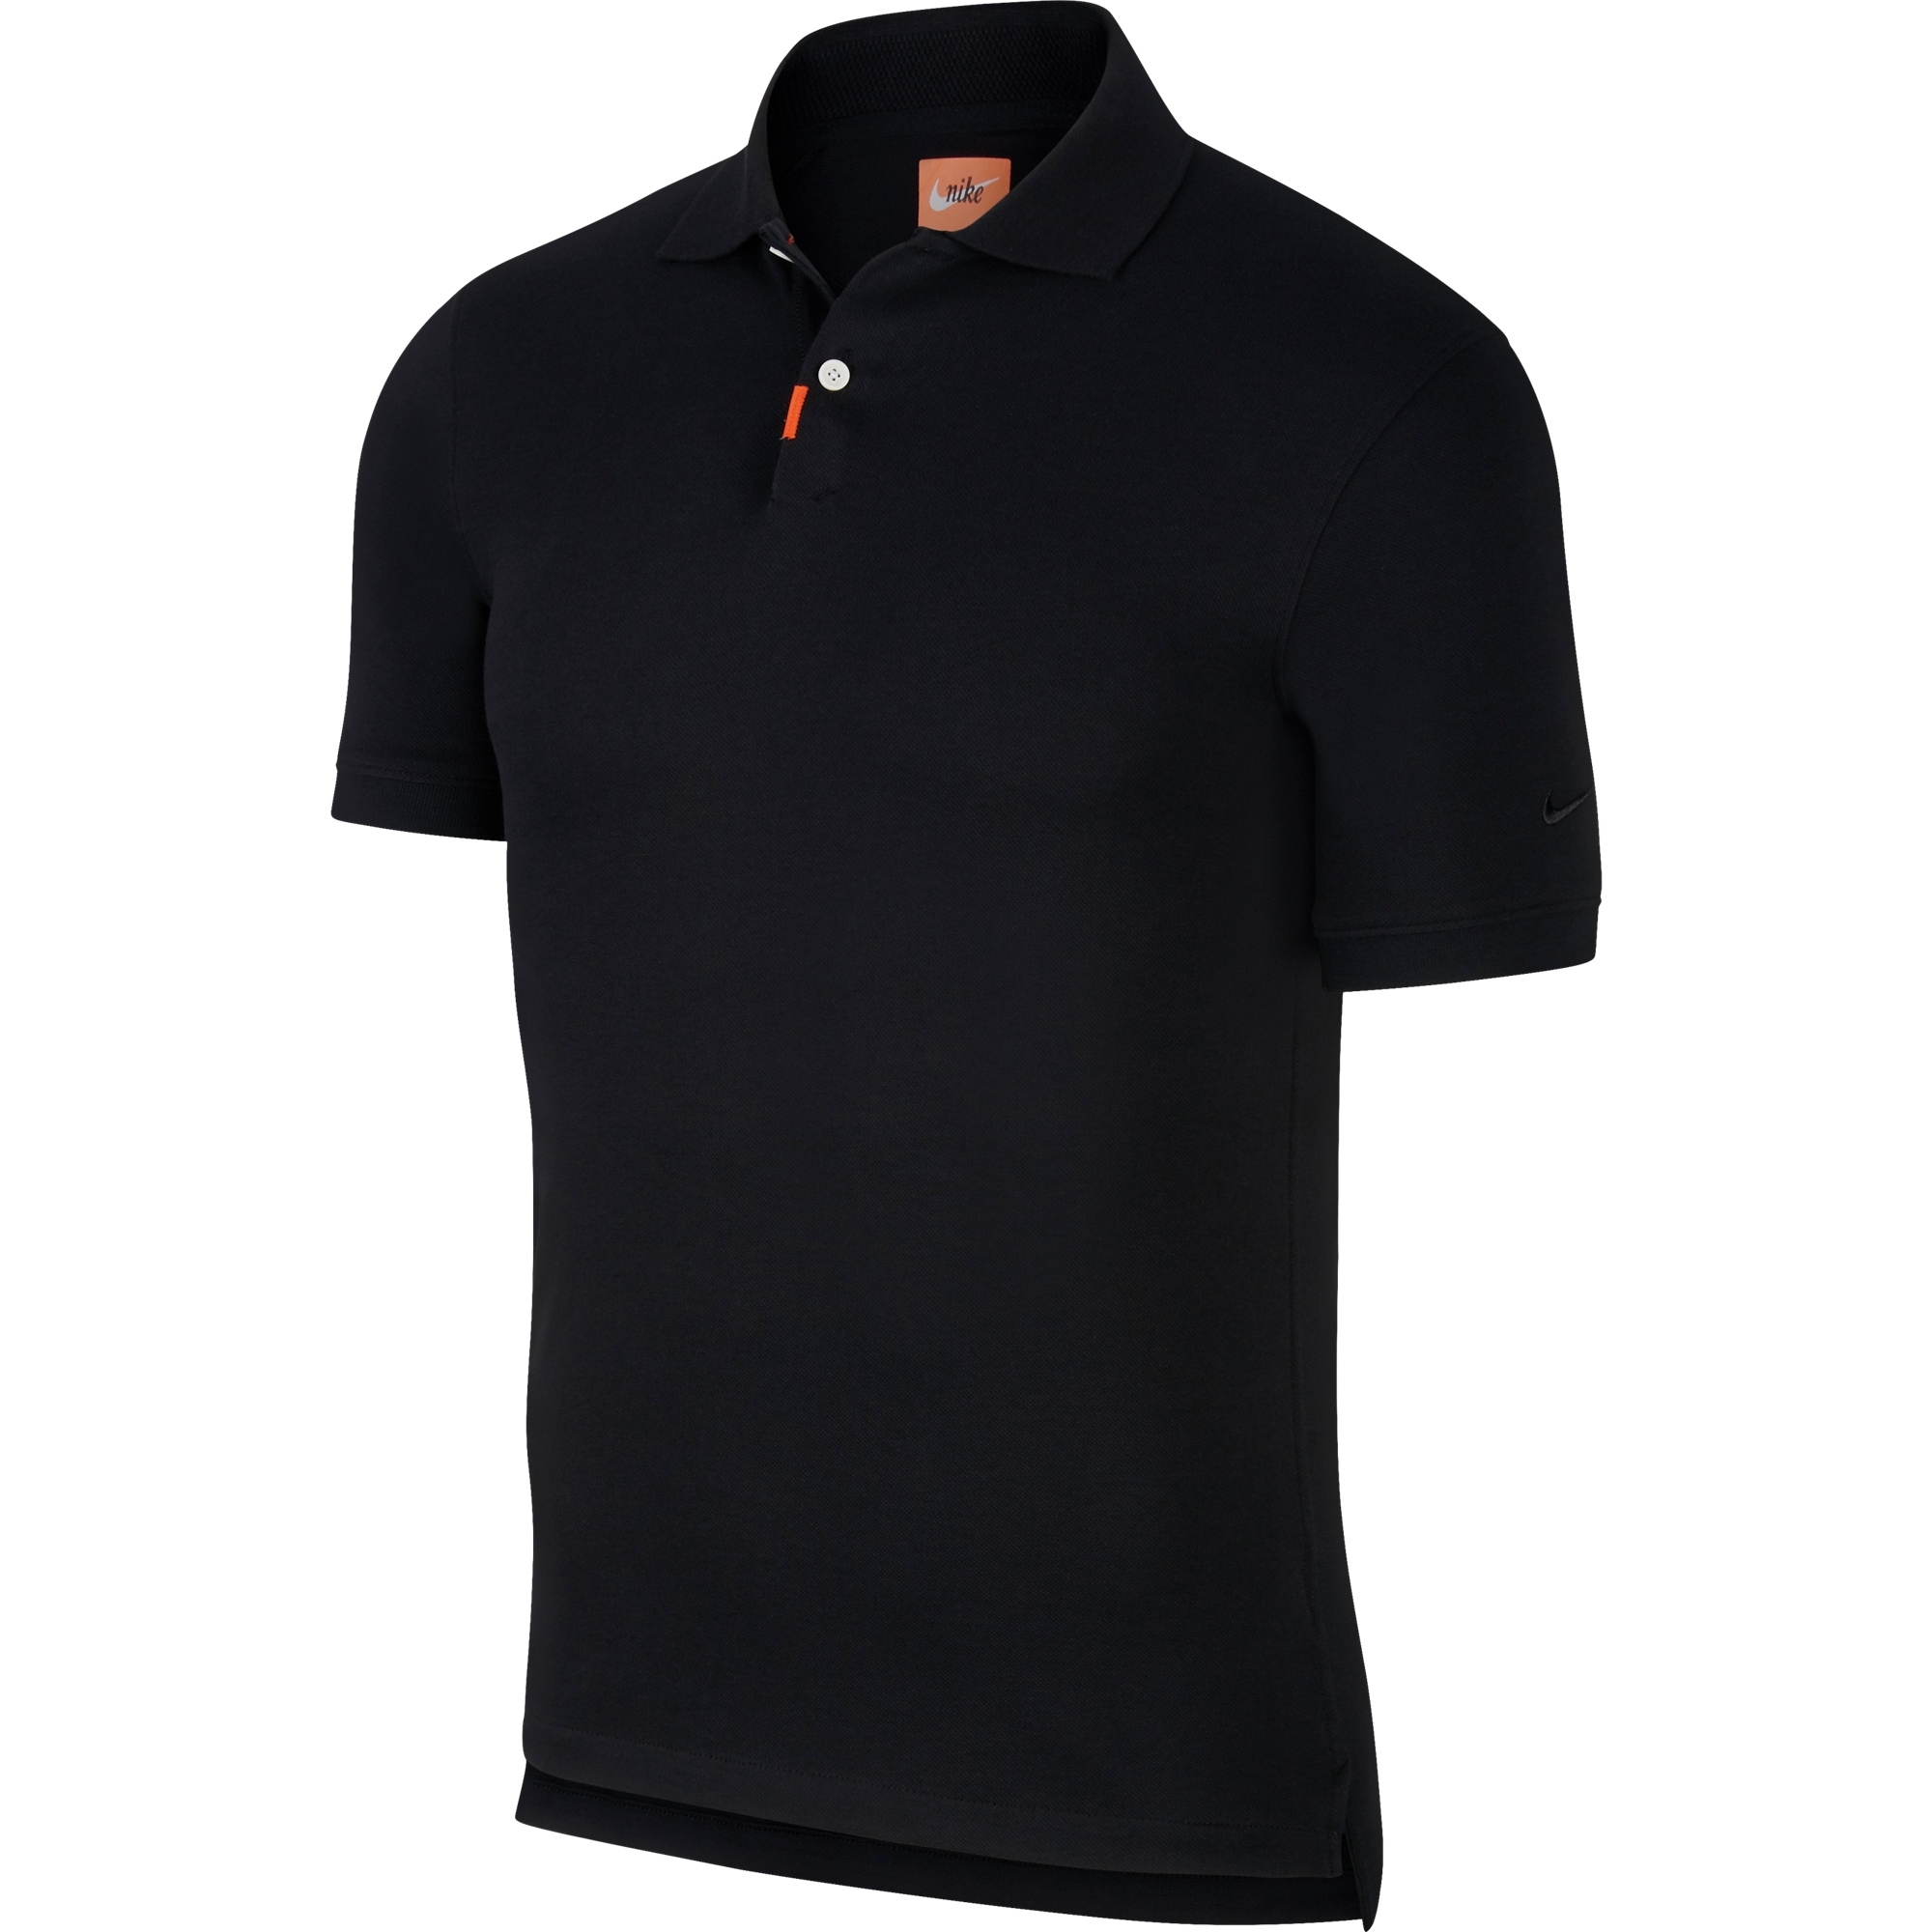 Nike Mens Dri Fit Slim Fit Breathable Golf Polo Shirt M- Chest 37.5-41